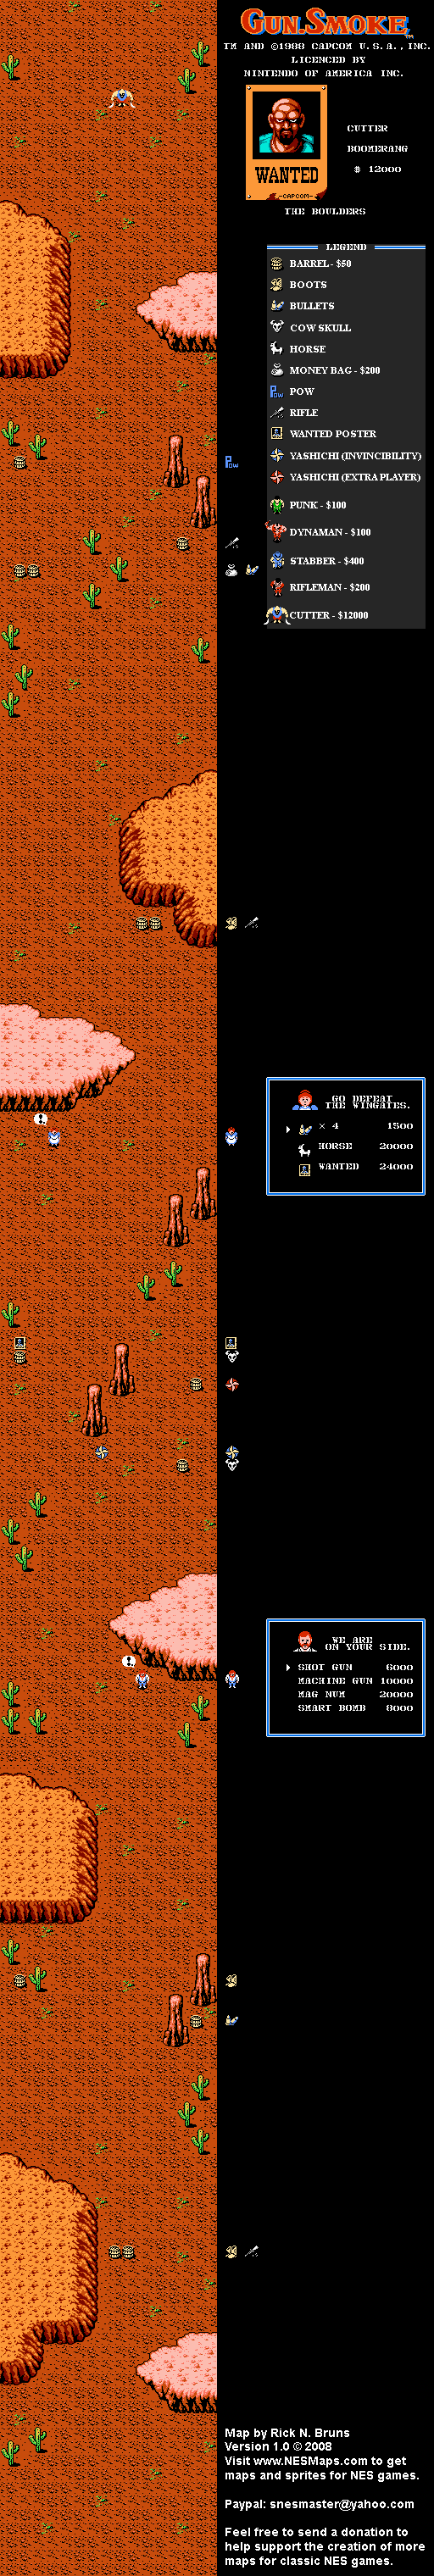 Gun Smoke - Stage 2 Nintendo NES Map